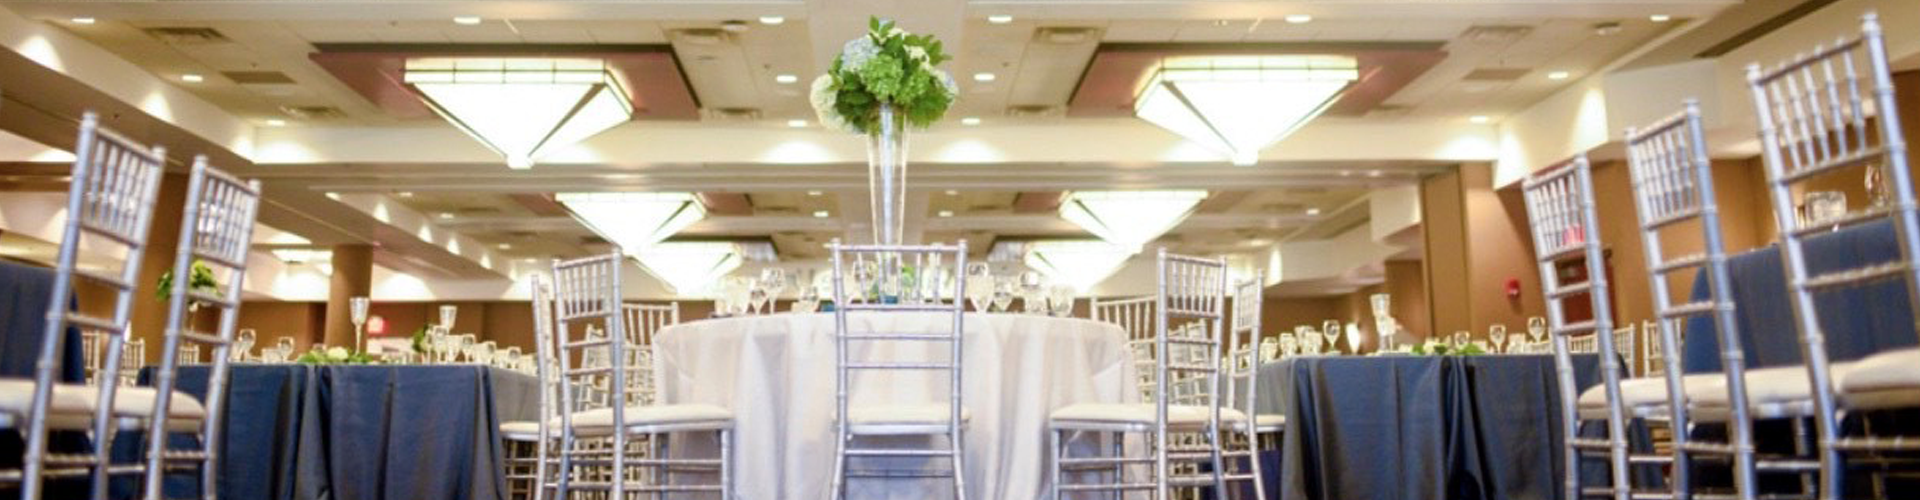 Banquet Room Set up for Blue Wedding Event